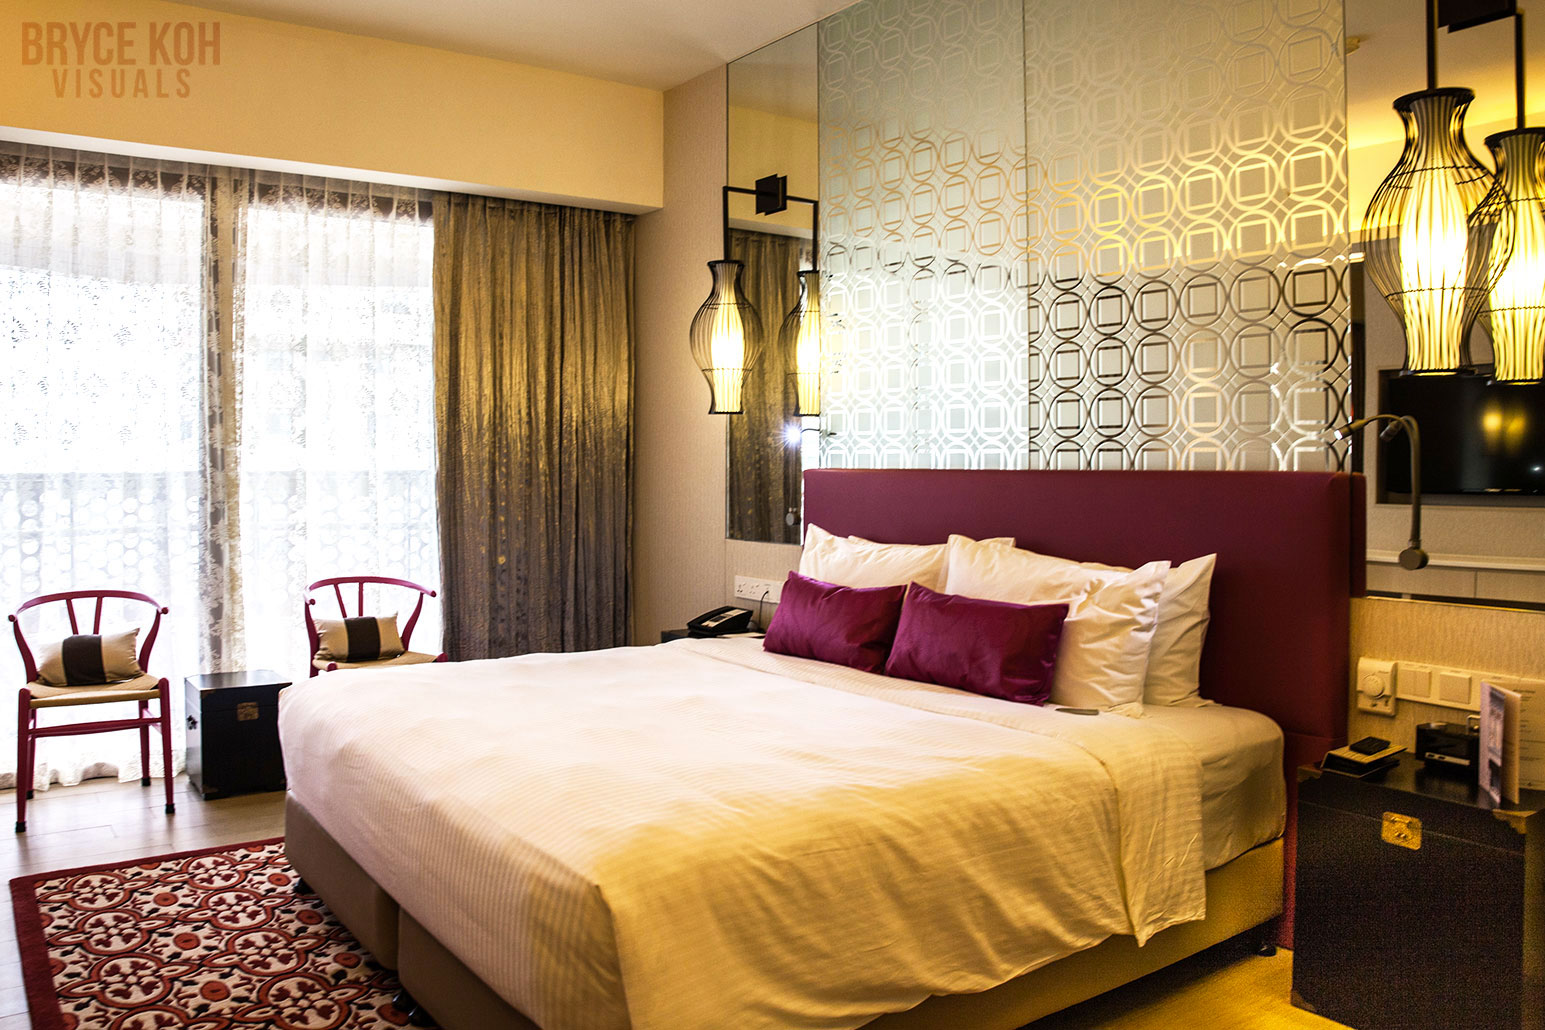 A new hotel opens its doors in the corridor of Singapore’s Peranakan Heritage